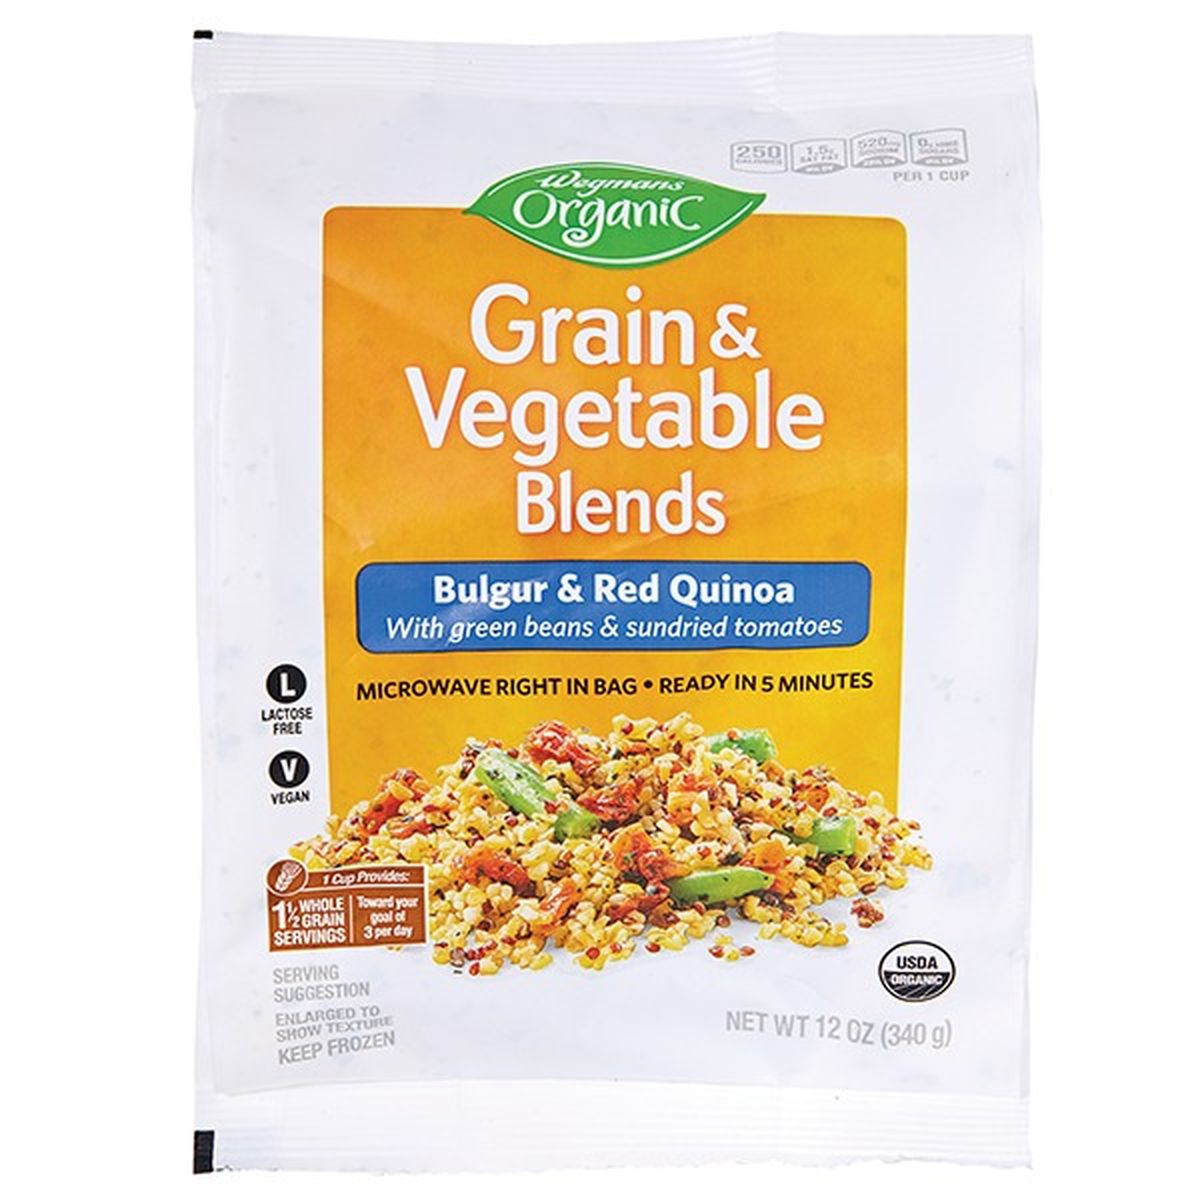 Calories in Wegmans Organic Grains & Vegetable Blends, Bulgur & Red Quinoa